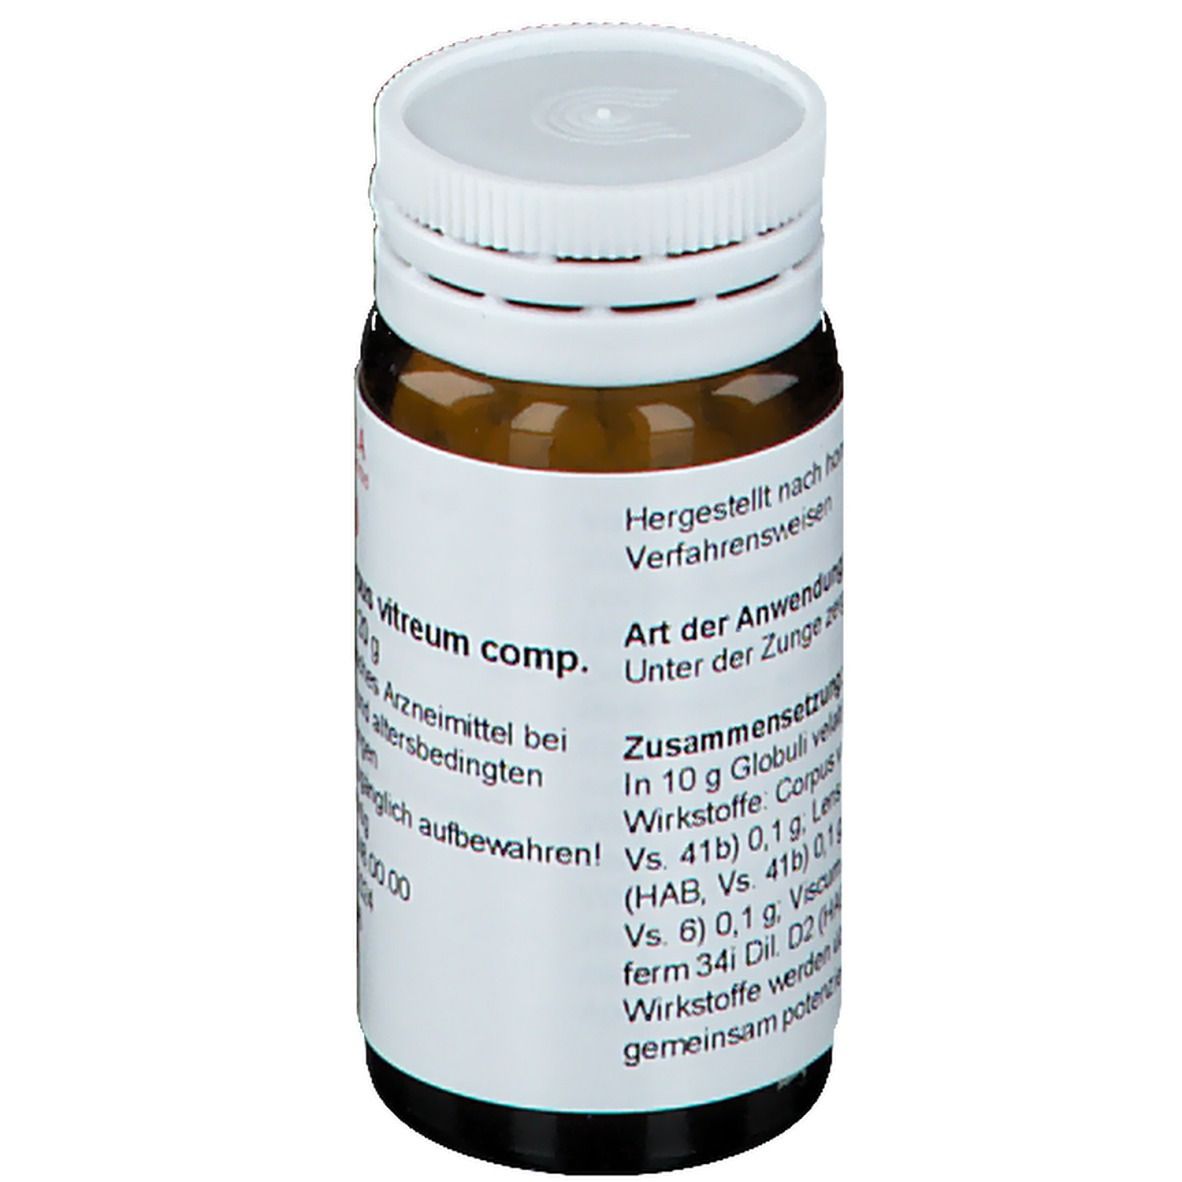 WALA® HORNERZ/ Corpus Vitreum Comp. Globuli